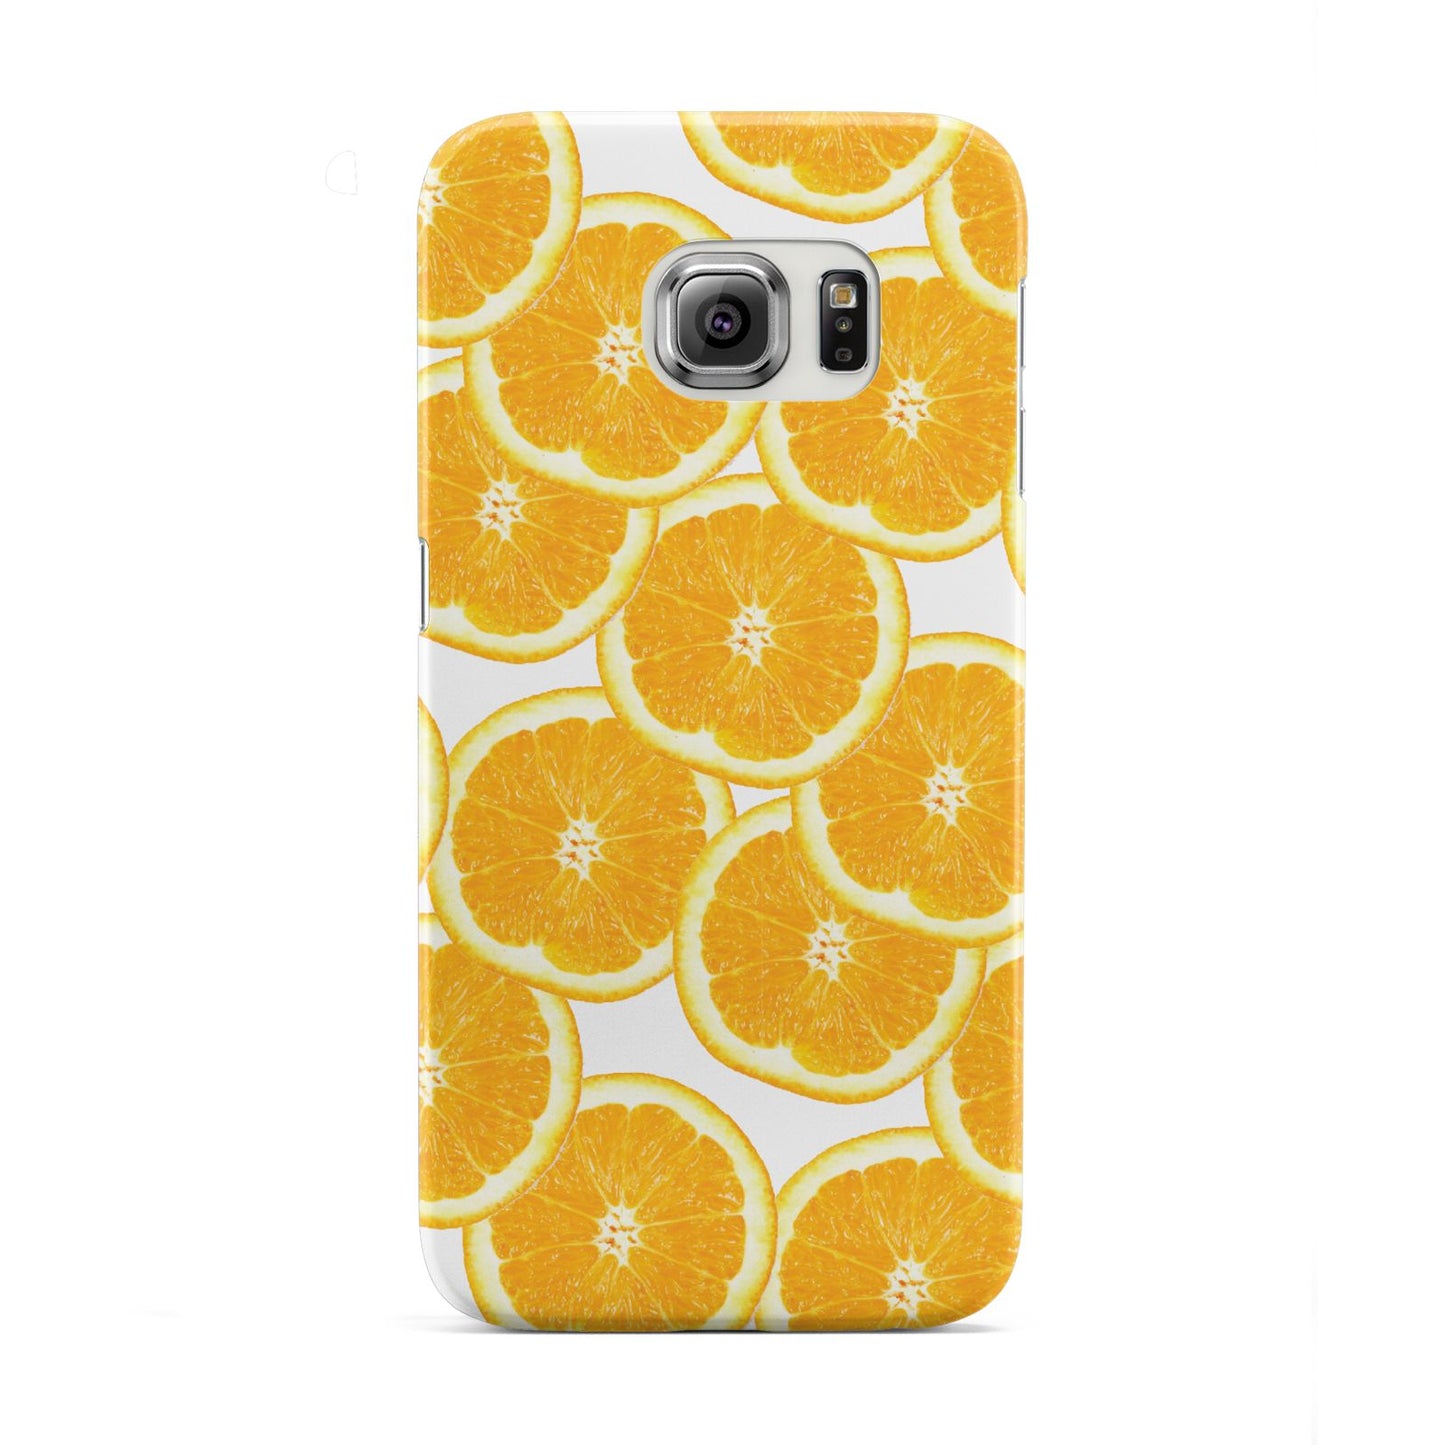 Orange Fruit Slices Samsung Galaxy S6 Edge Case